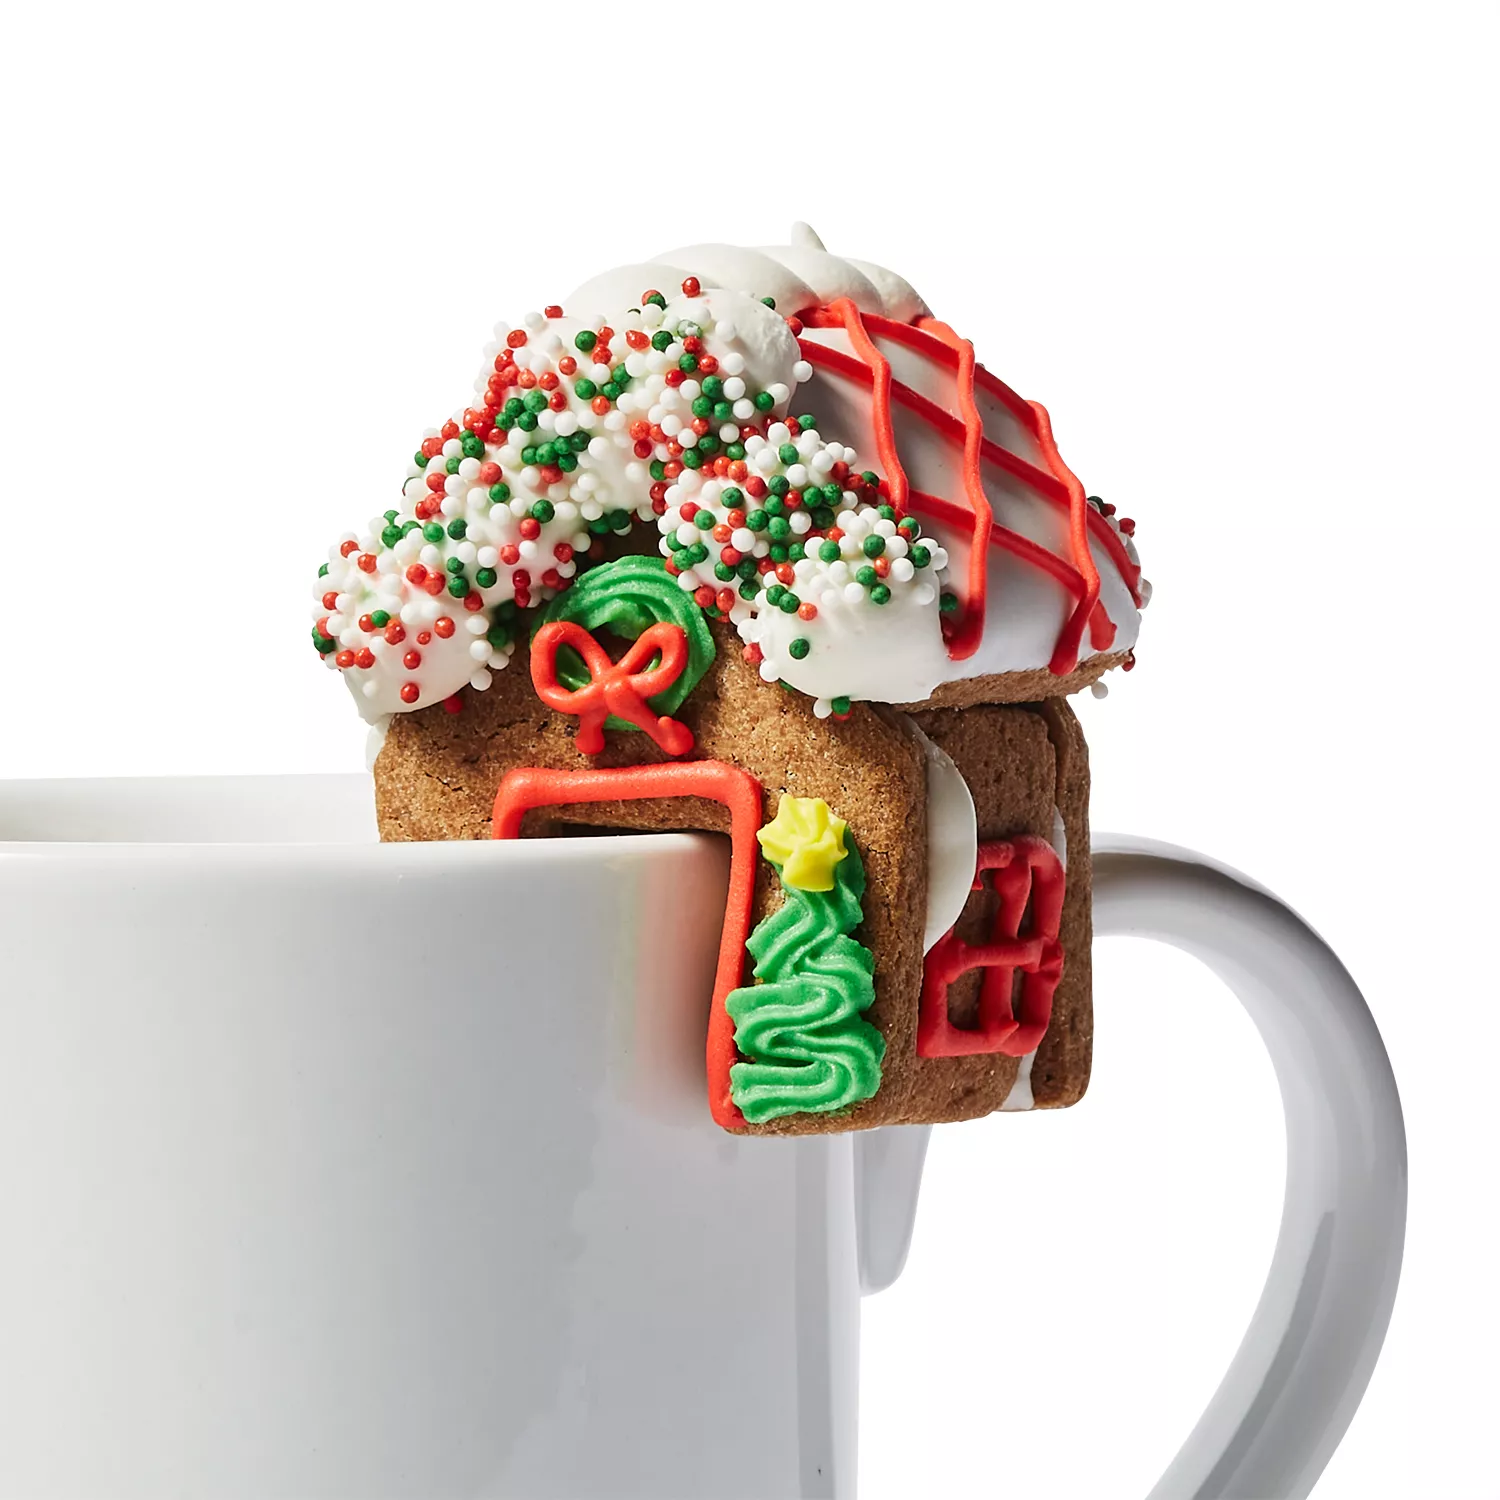 Teeny gingerbread house mug toppers. So cute! Houston TX : r/Costco